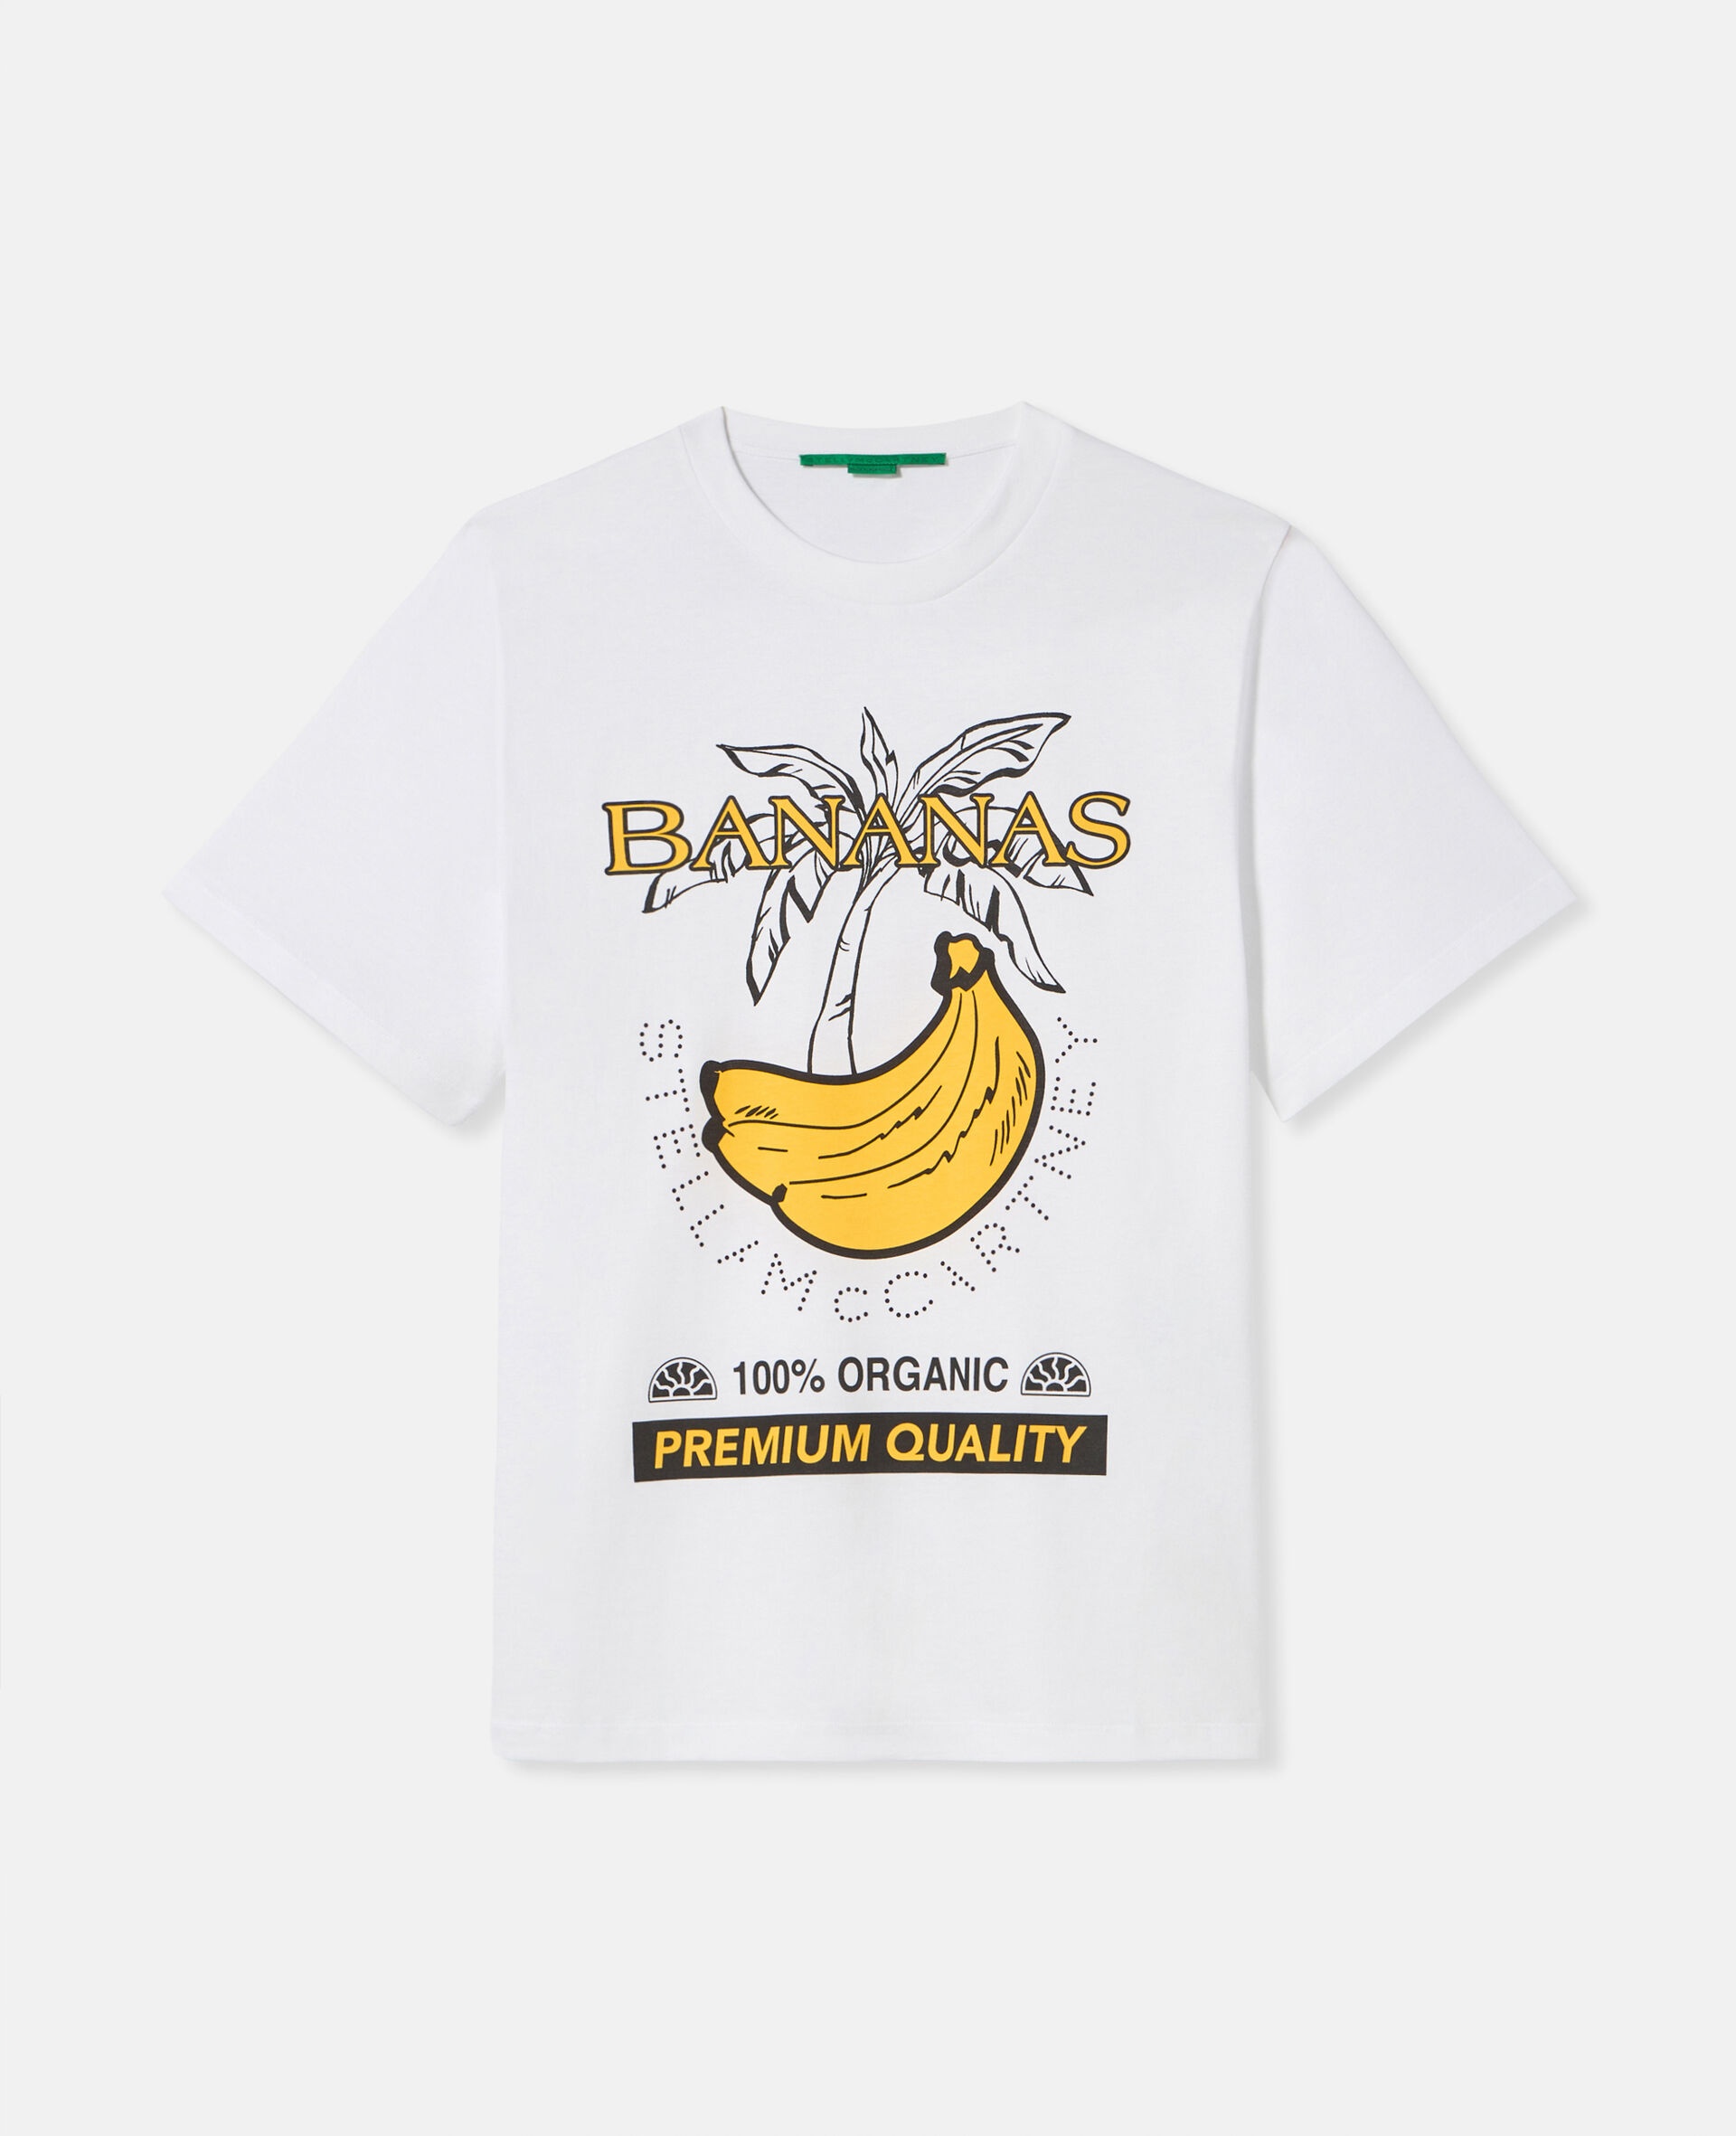 'Bananas' Graphic T-Shirt - 1